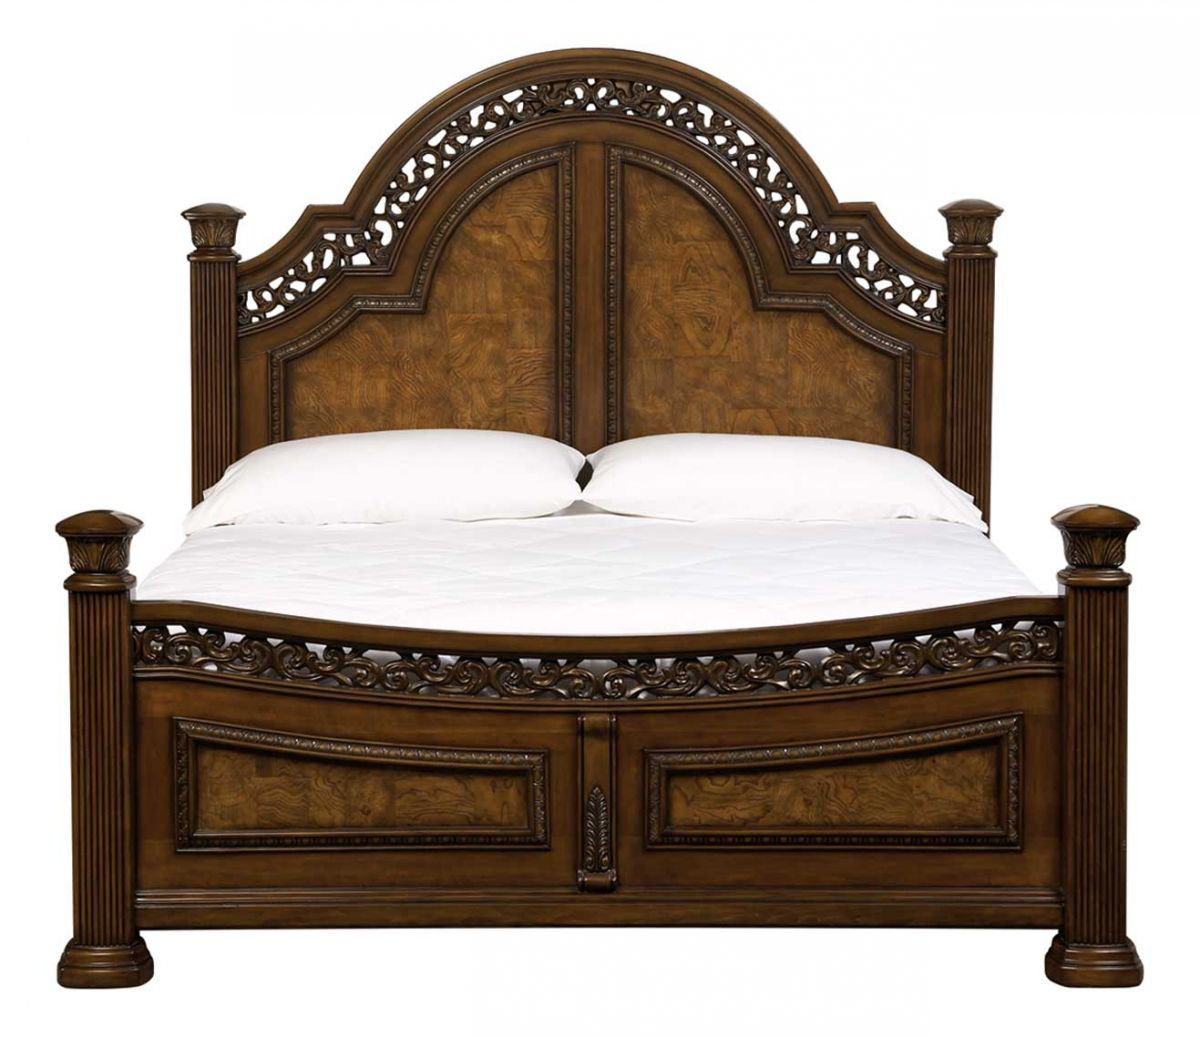 Verona 5 Pc Bedroom Group Bad, Verona King Size Bed